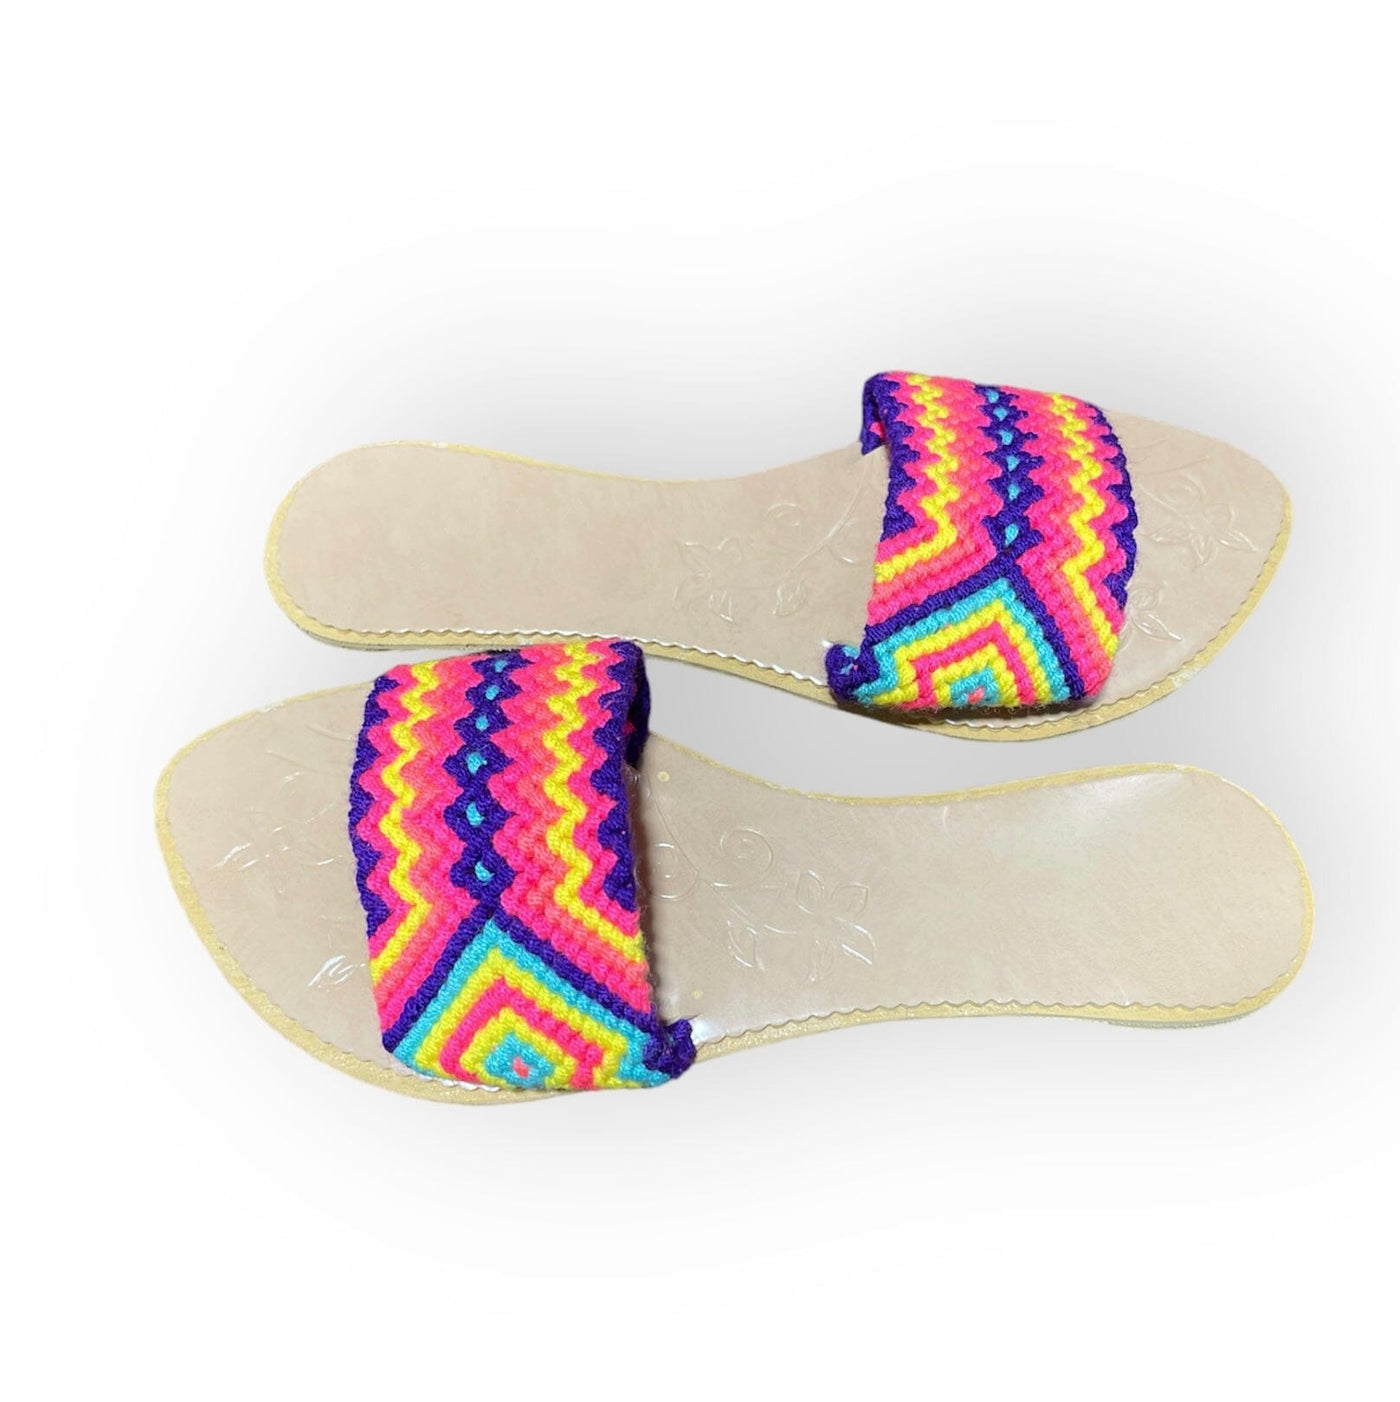 Neon Flat Summer Sandals - Macrame boho style Summer Sandals US 10 